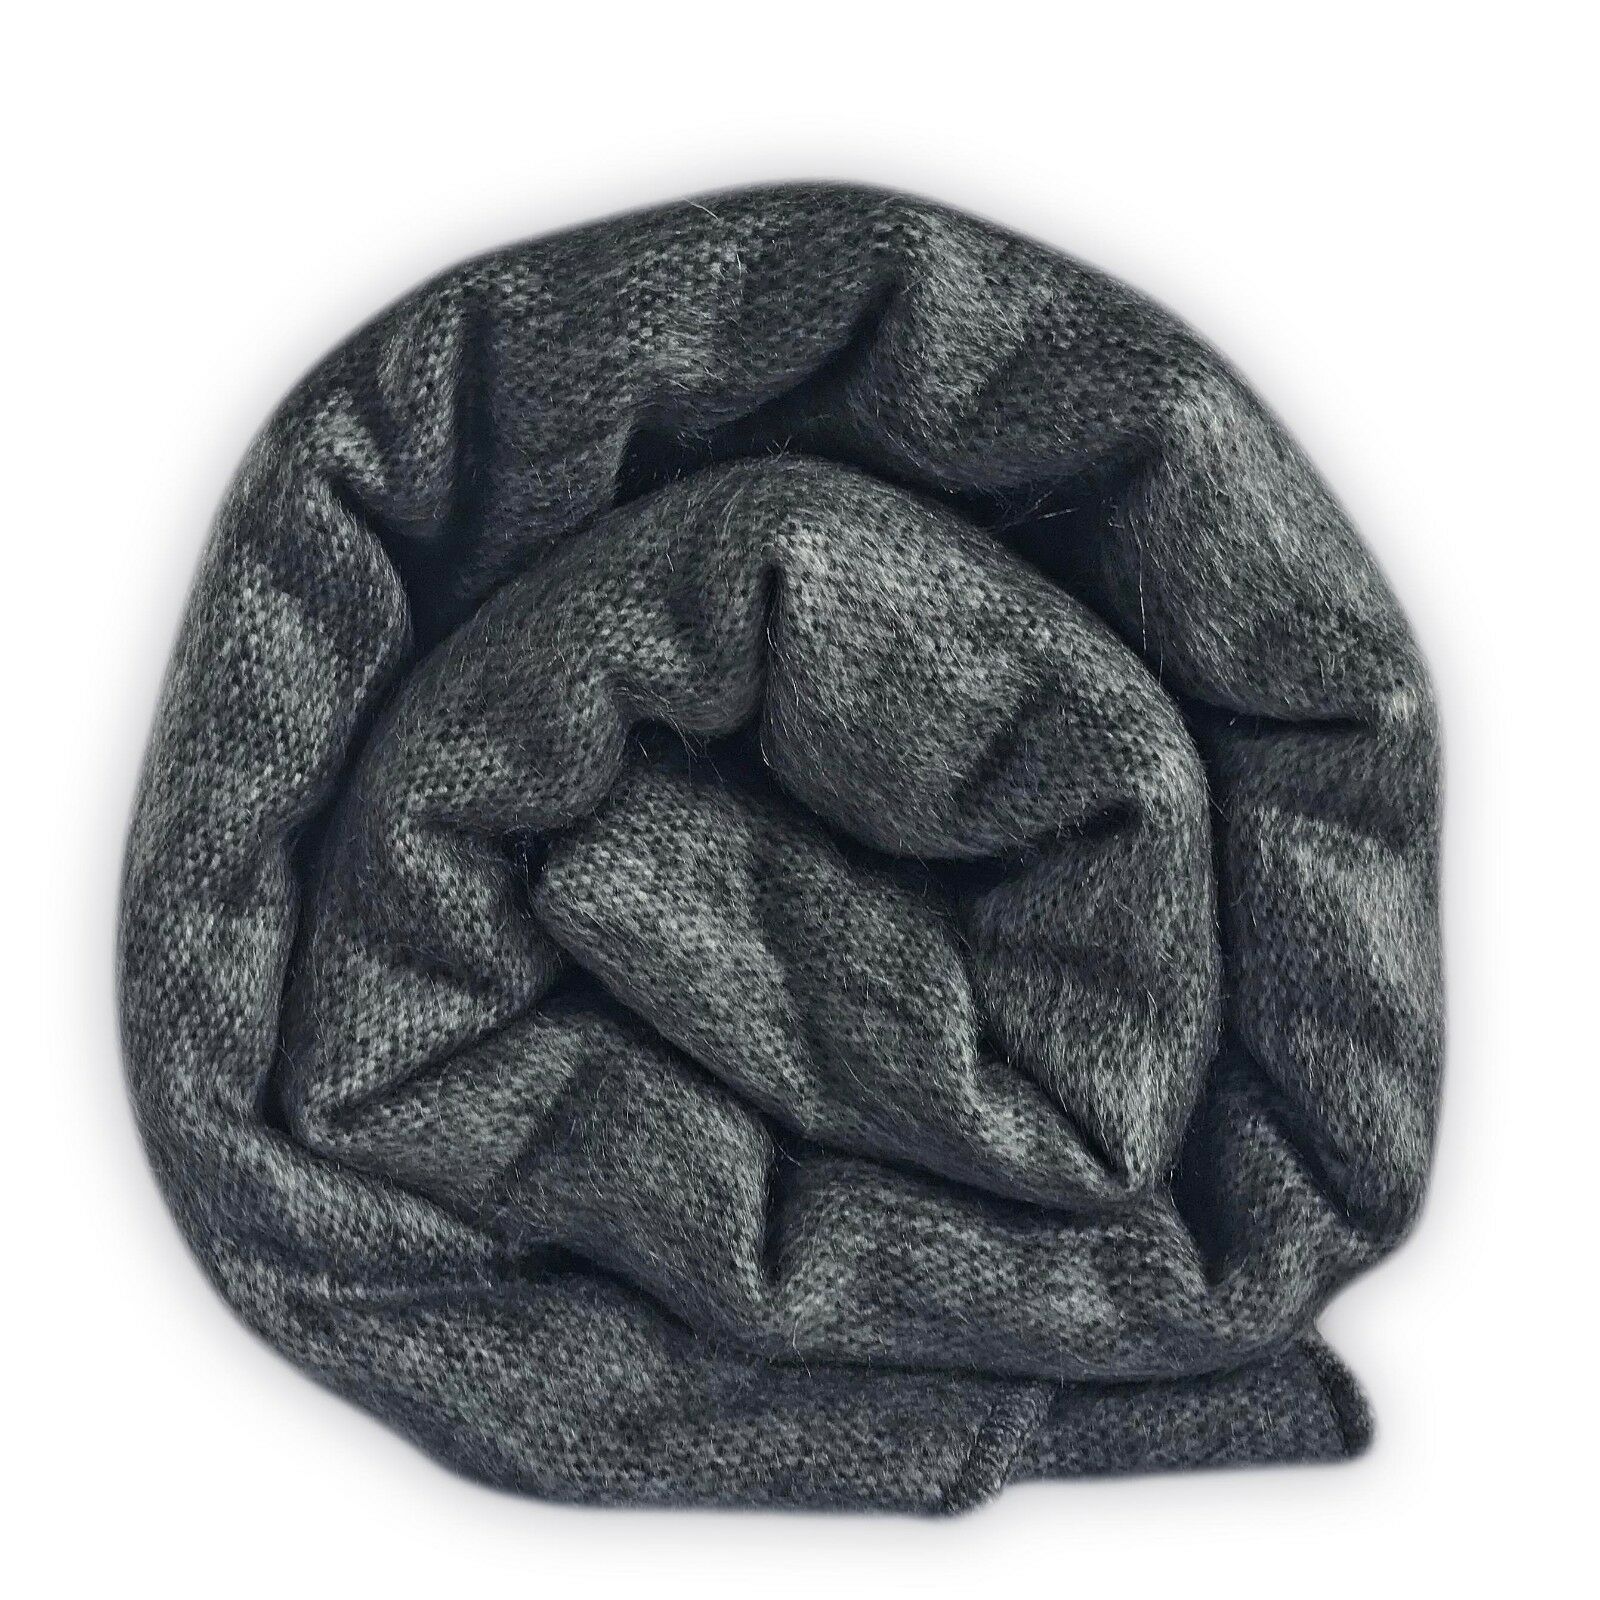 Suncamal - Baby Alpaca Wool Throw Blanket / Sofa Cover - Queen 90" x 65" - solid pattern